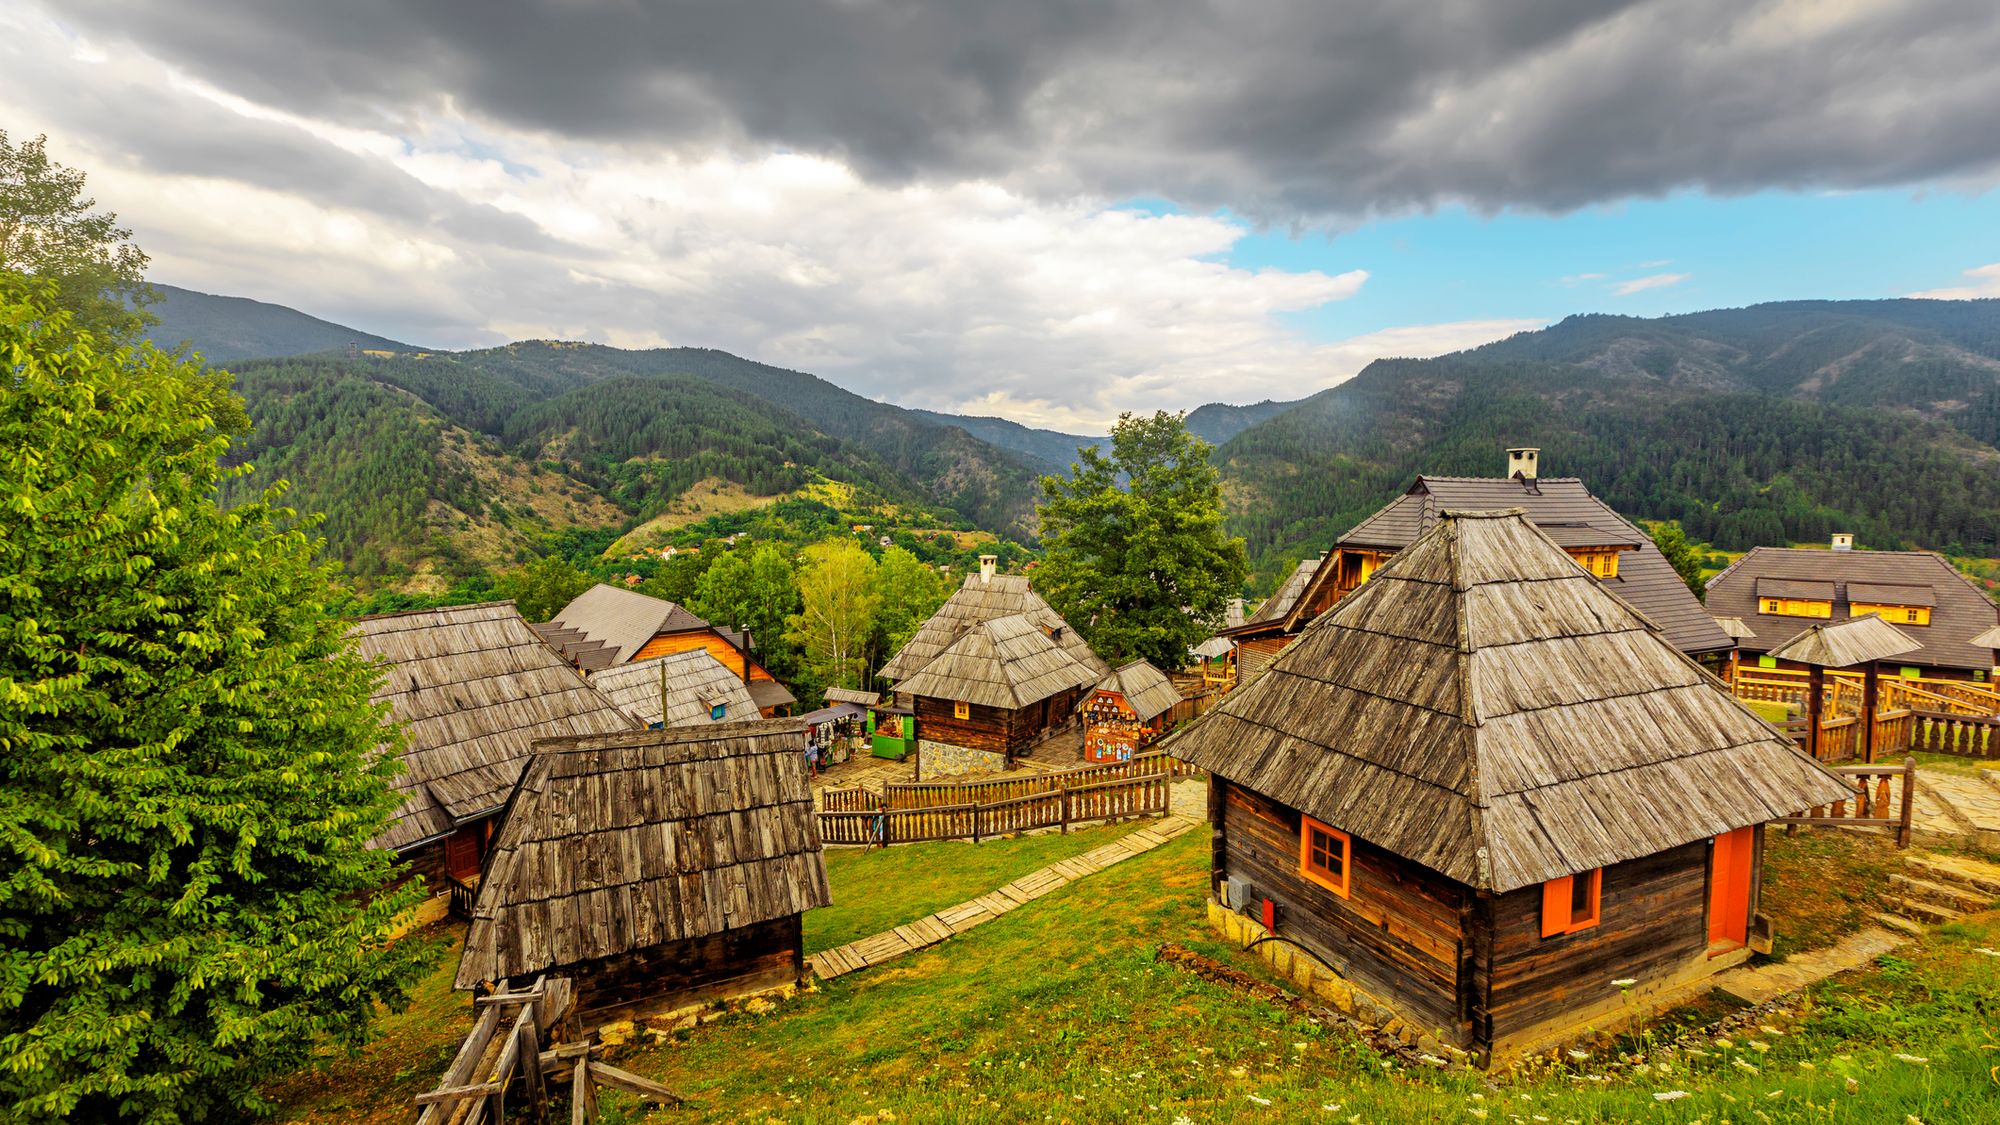 Drvengrad mini village, Serbia.